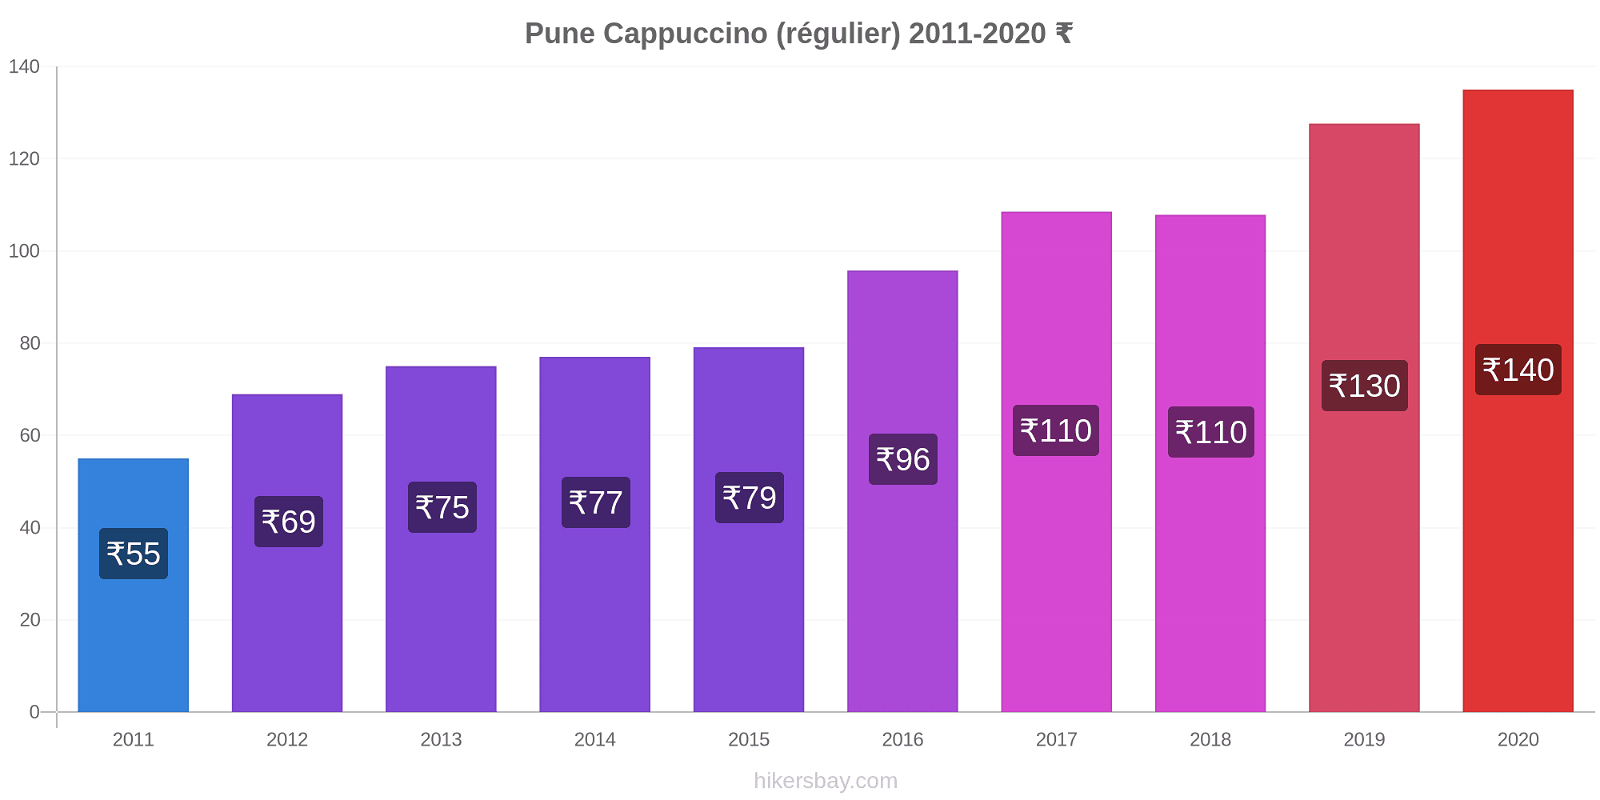 Pune changements de prix Cappuccino (régulier) hikersbay.com